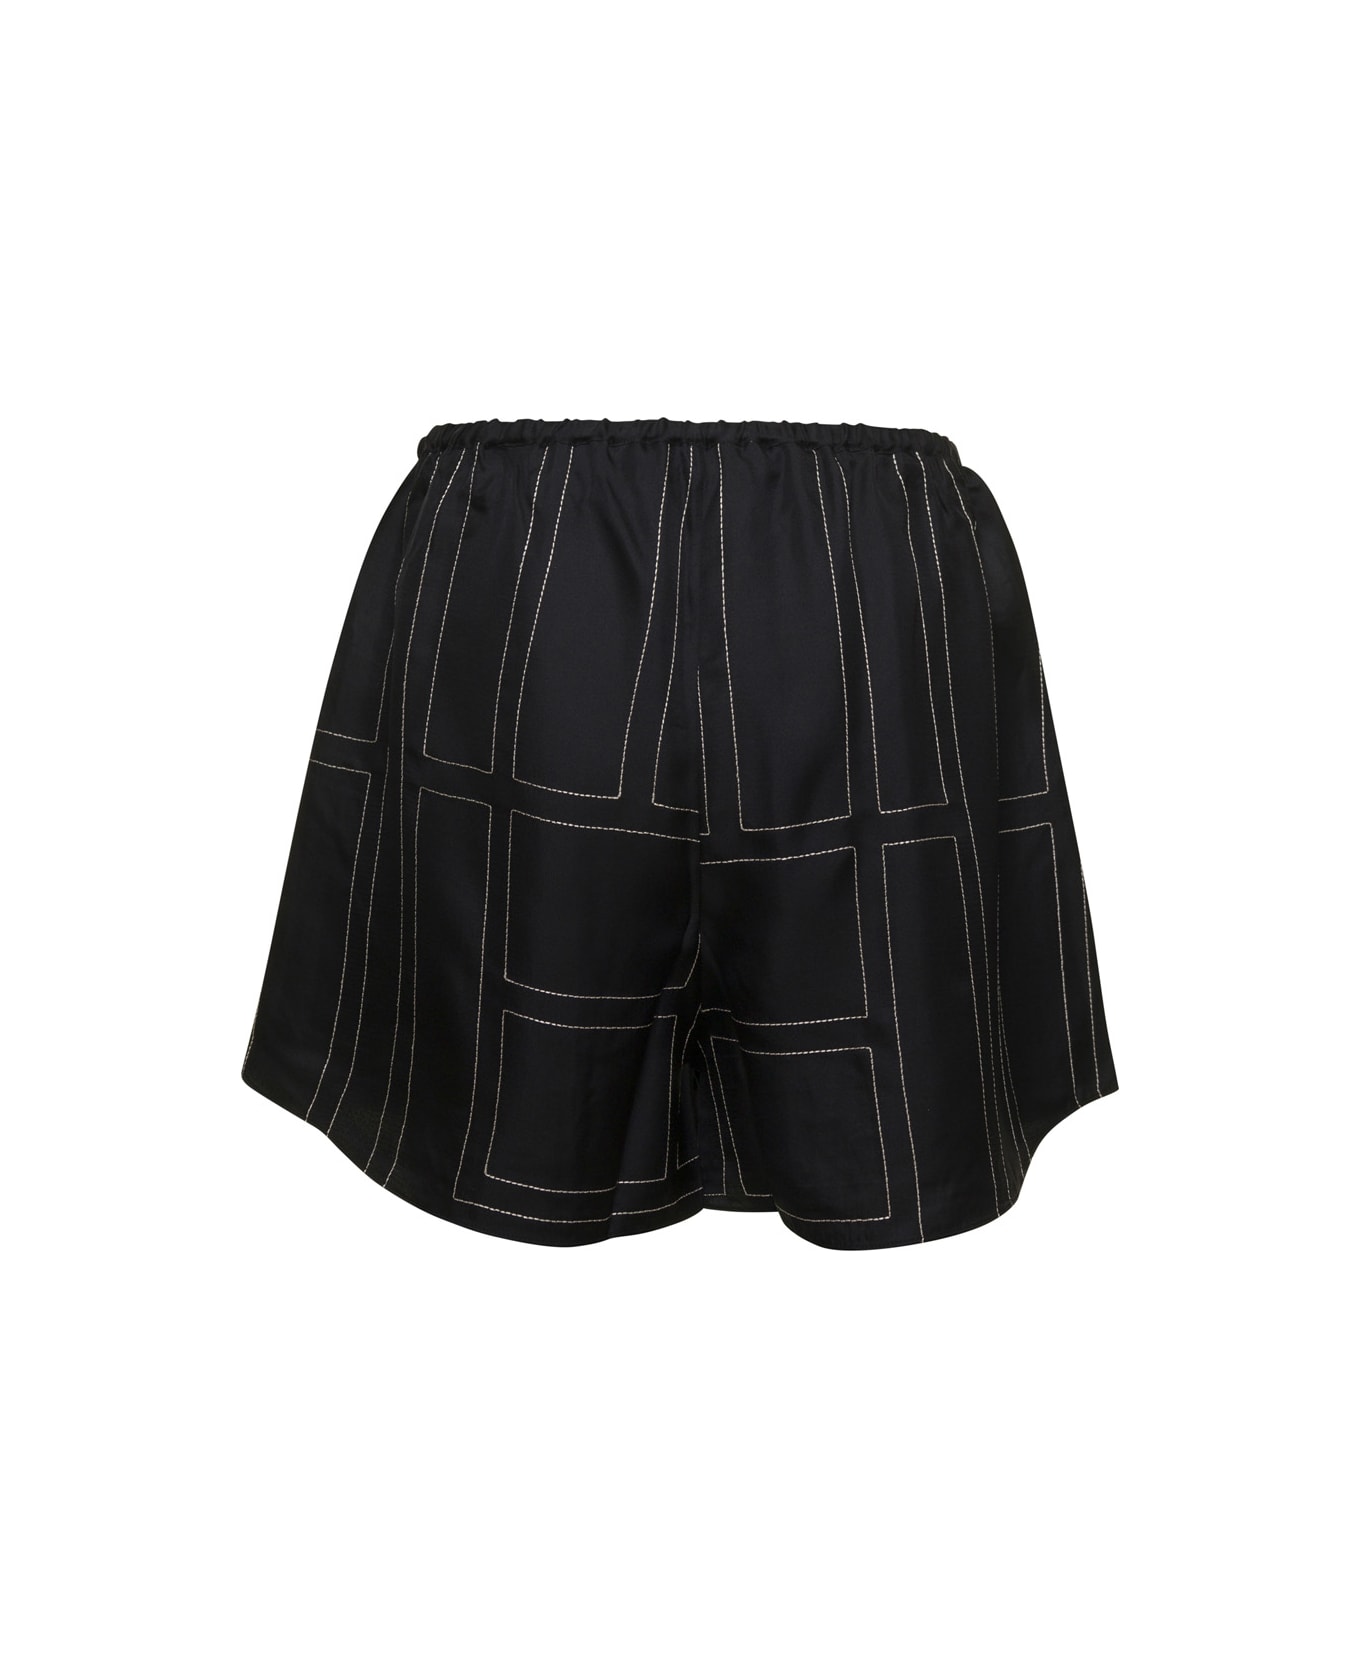 Totême Black Shorts With Geometric Logo Print In Silk Woman - Black